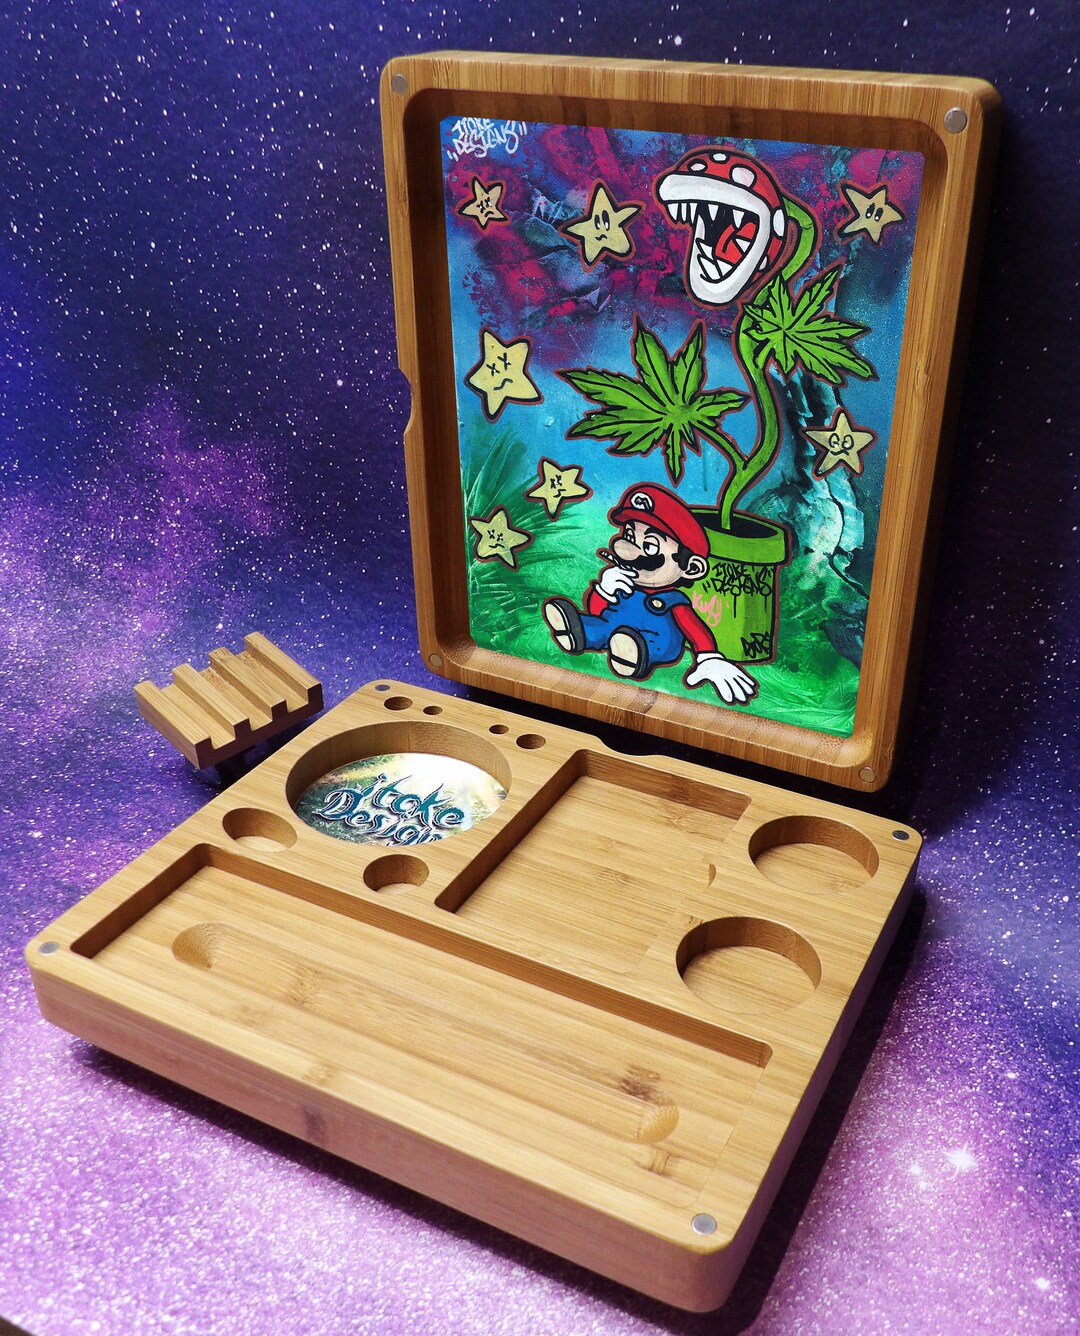 Super Mario Smoke Sesh Rolling Tray